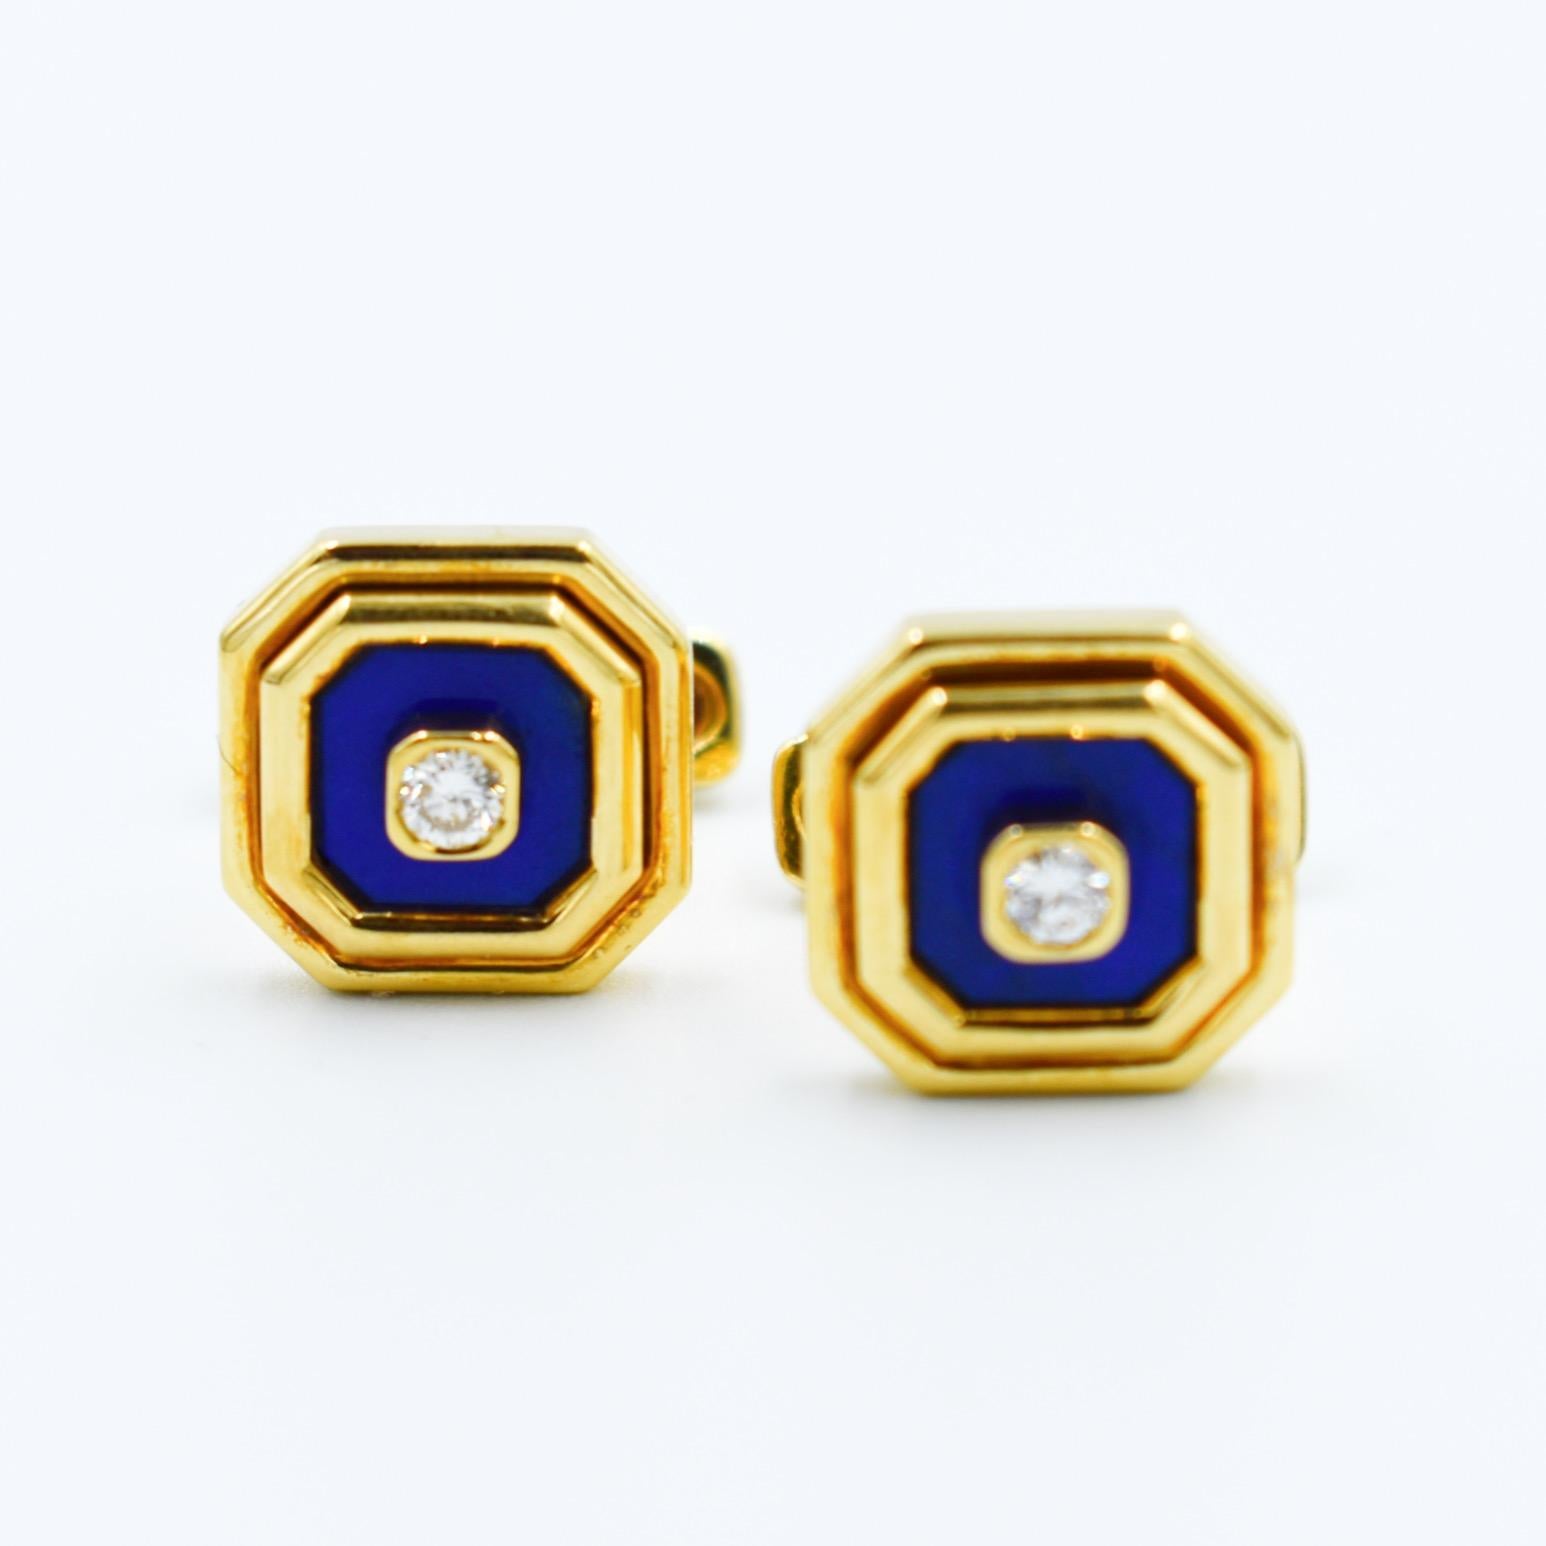 Brilliant Cut Van Cleef & Arpels 18-Carat Gold Cufflinks with Lapis Lazuli and Diamonds For Sale